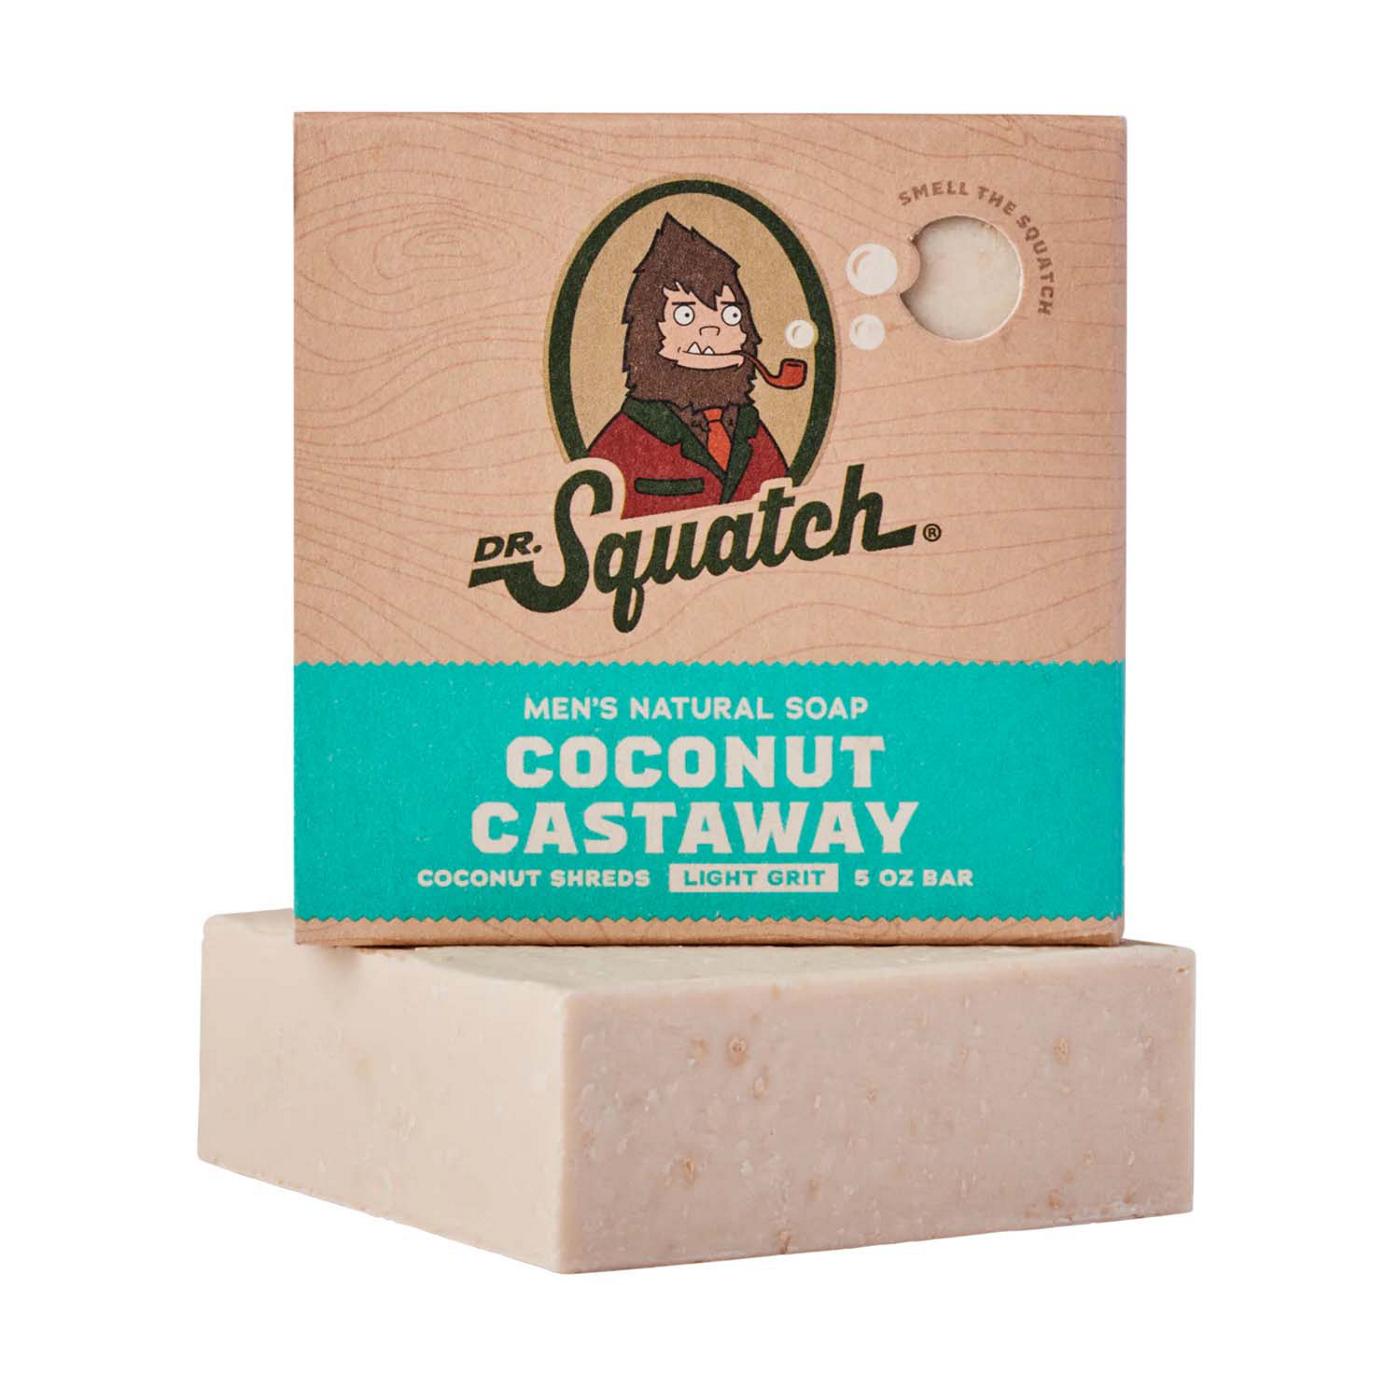 Dr. Squatch Men's Natural Soap - Coconut Castaway; image 4 of 5